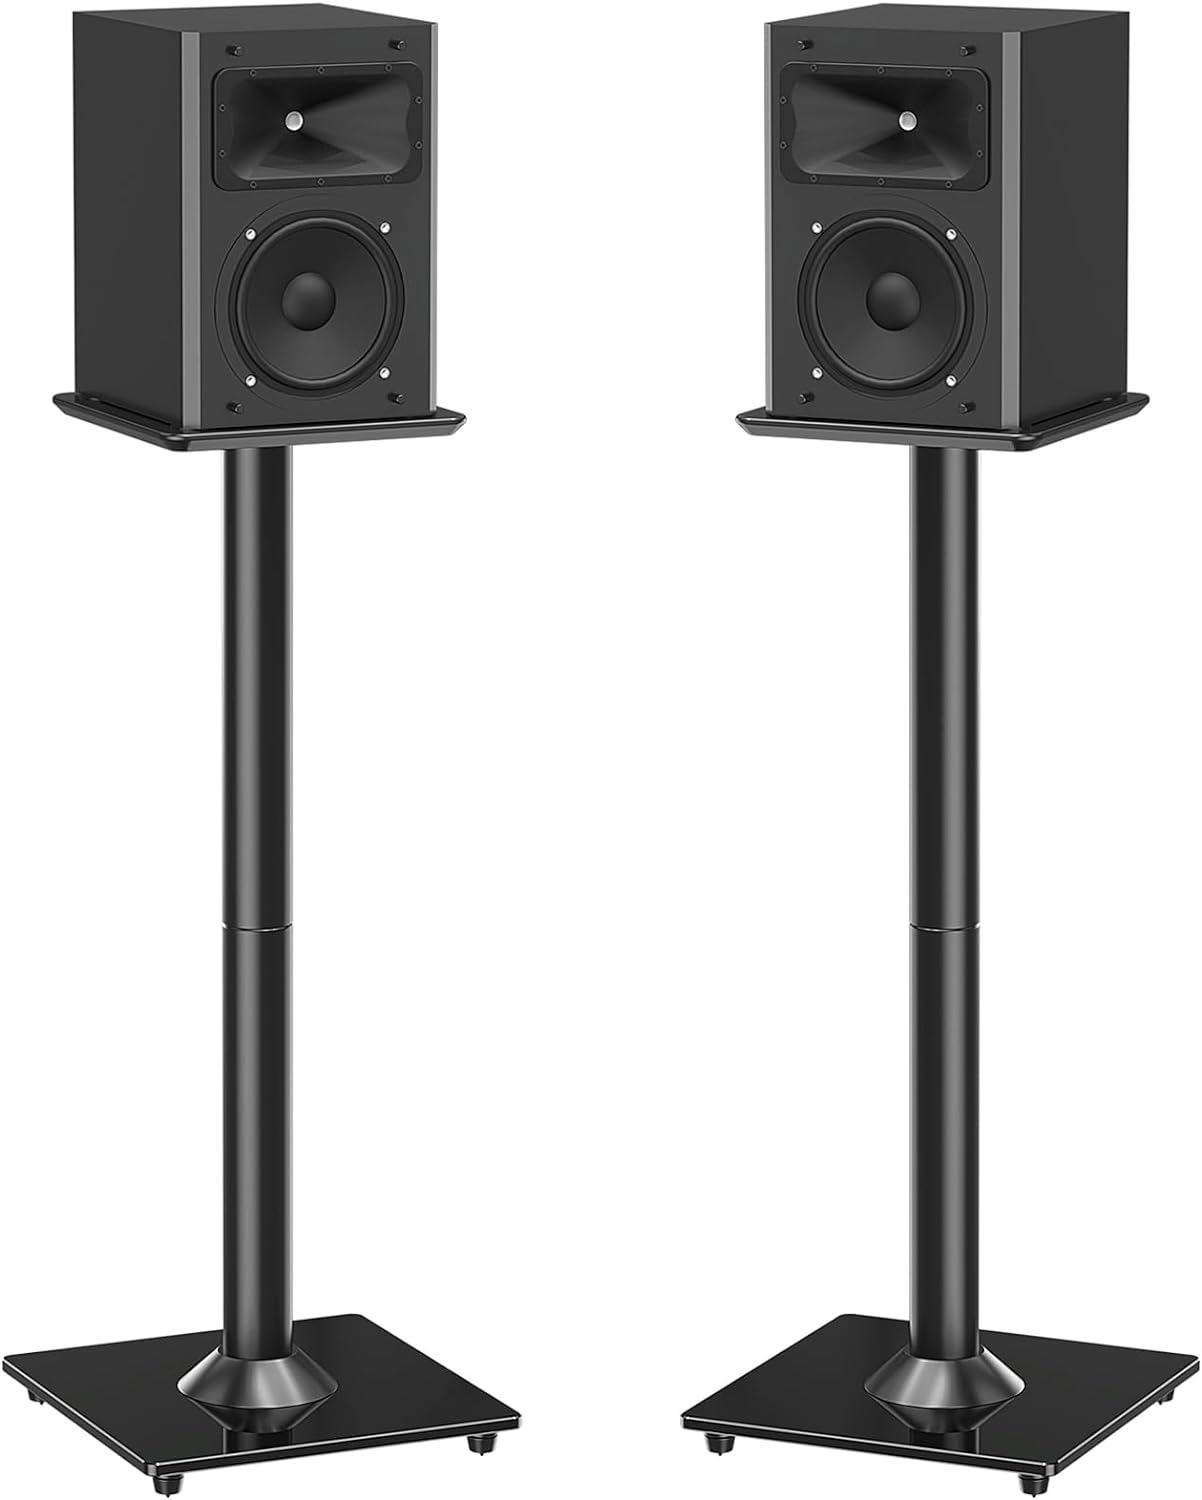 MOUNTUP Universal Speaker Stands Pair for Surround Sound MU9132